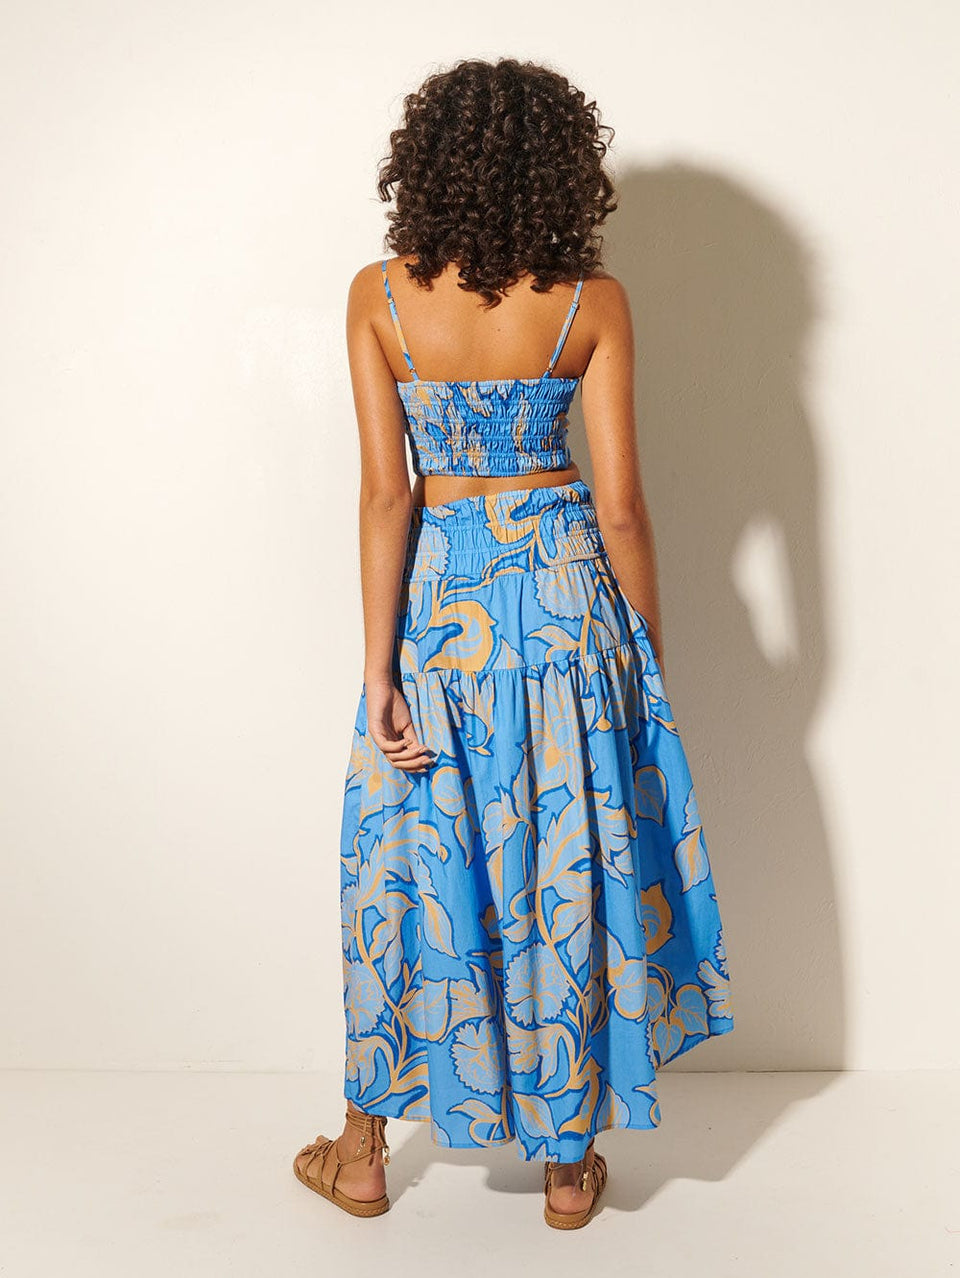 Taniana Crop Top KIVARI | Model wears blue floral crop top with matching skirt back view